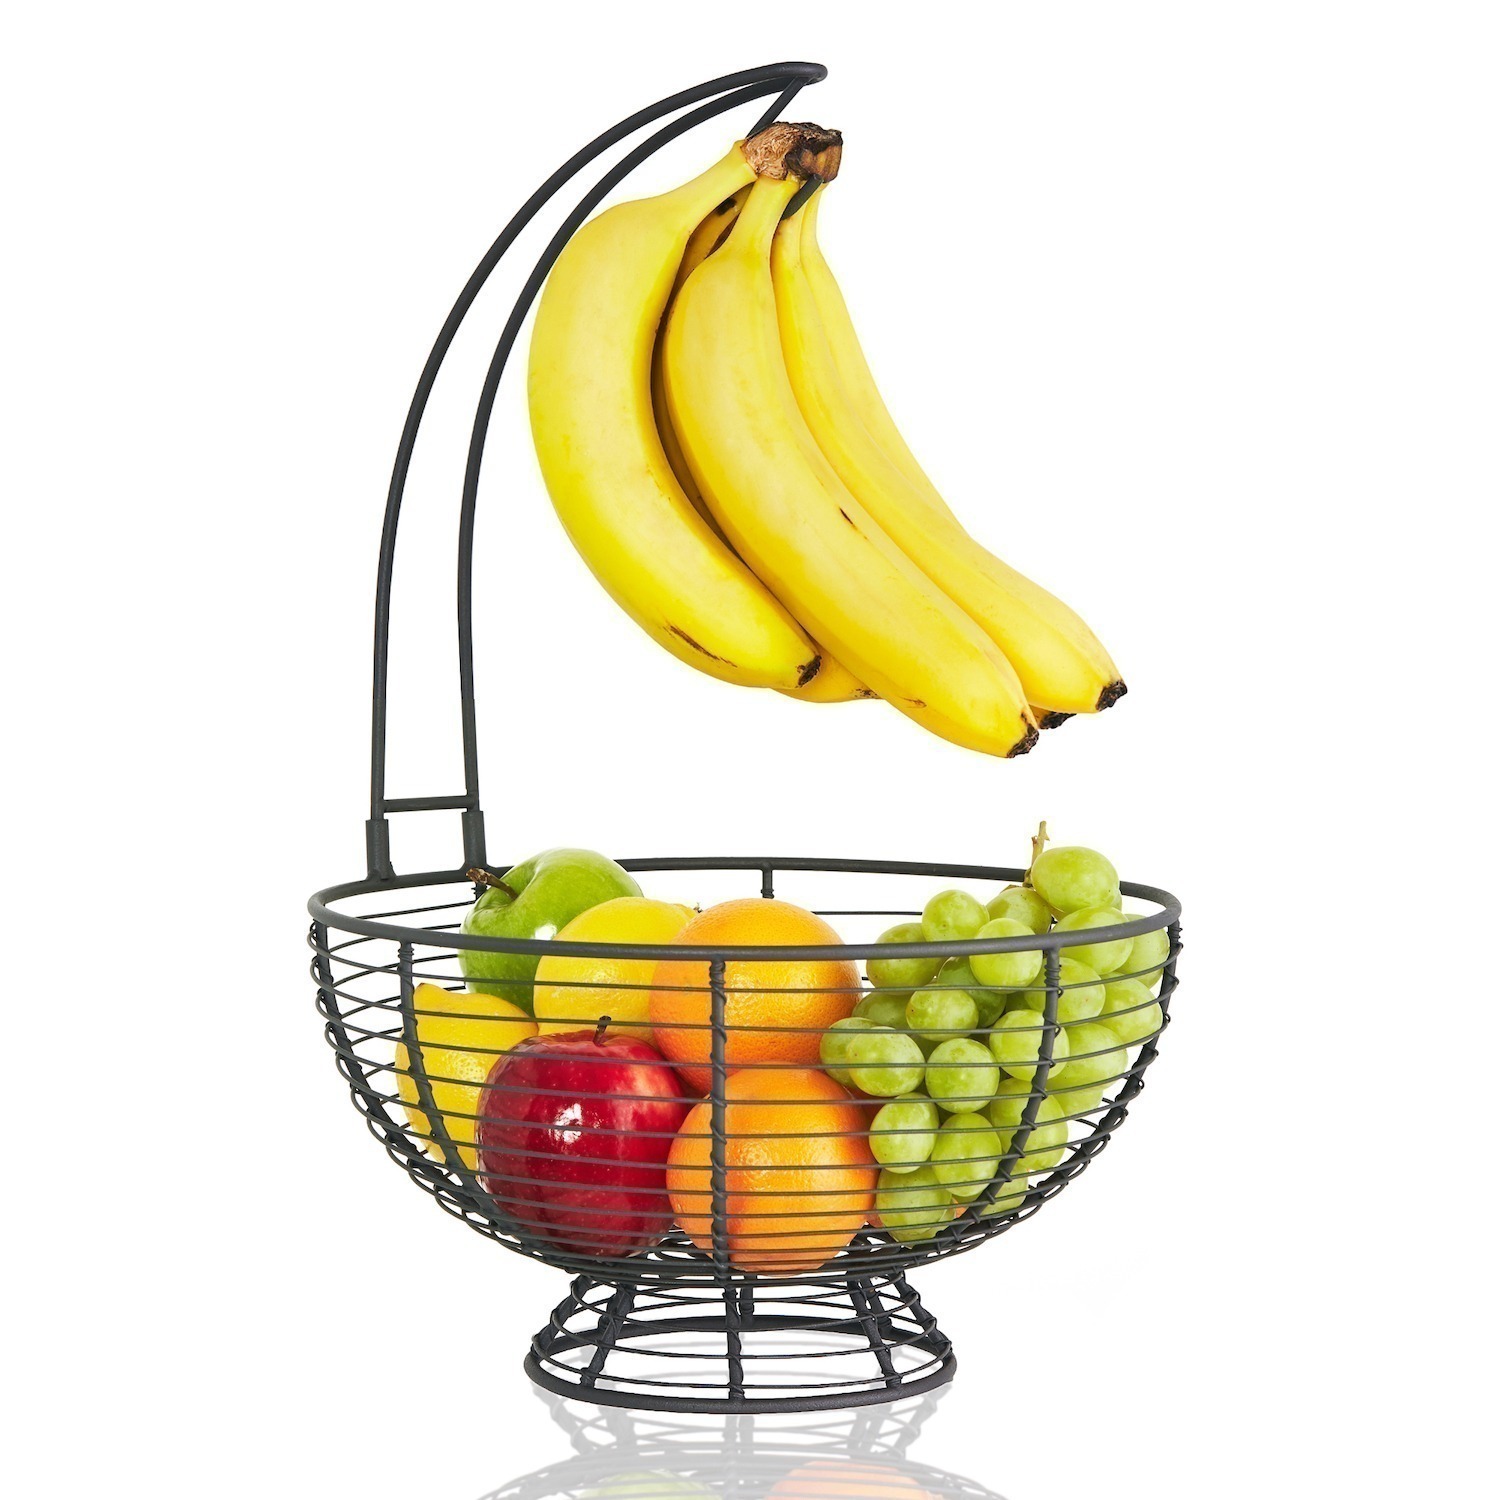 Fruit Basket With Banana Hanger